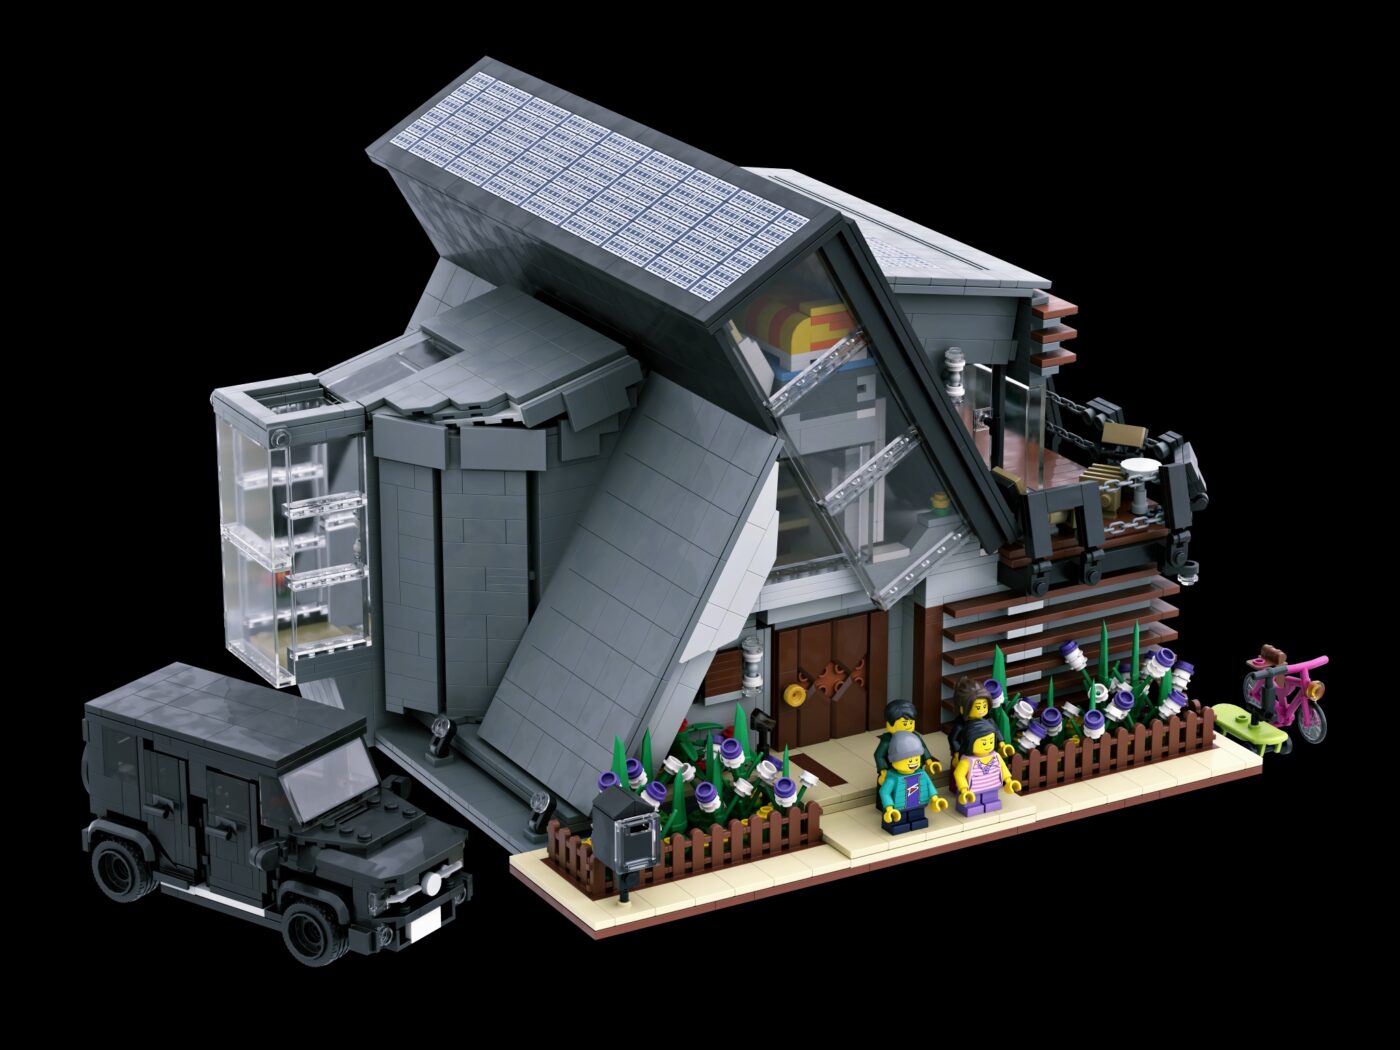 LEGO Bricklink Designer Program Series 2 The Lambda House